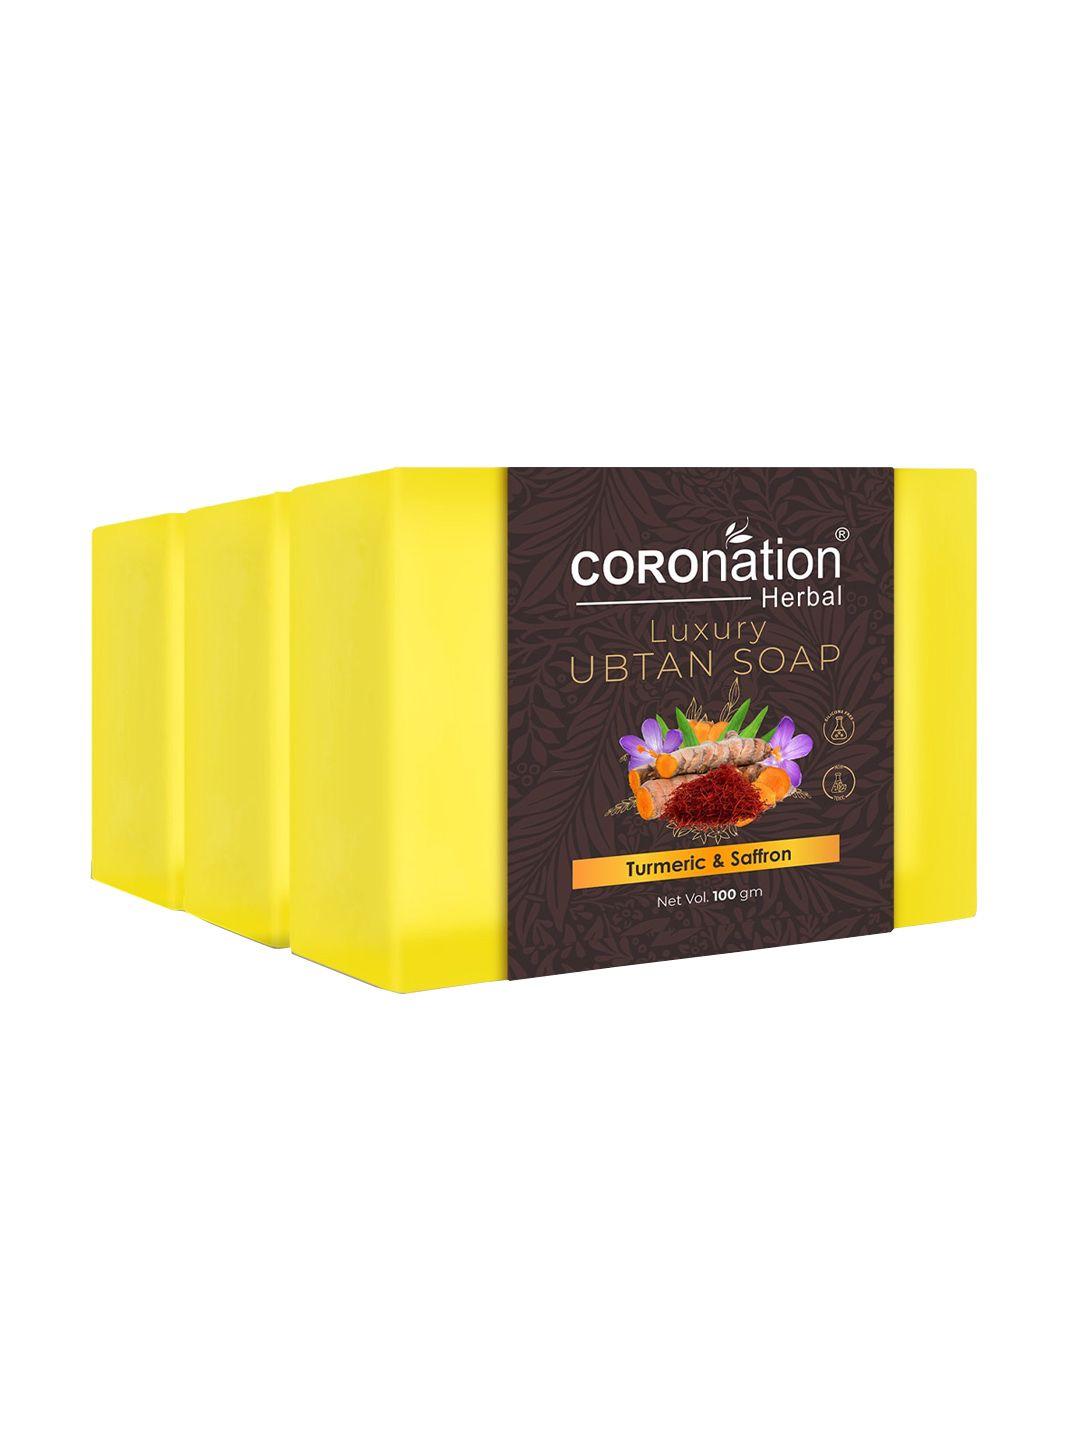 coronation herbal set of 3 anti-tan luxury ubtan soap with turmeric & saffron - 100 g each